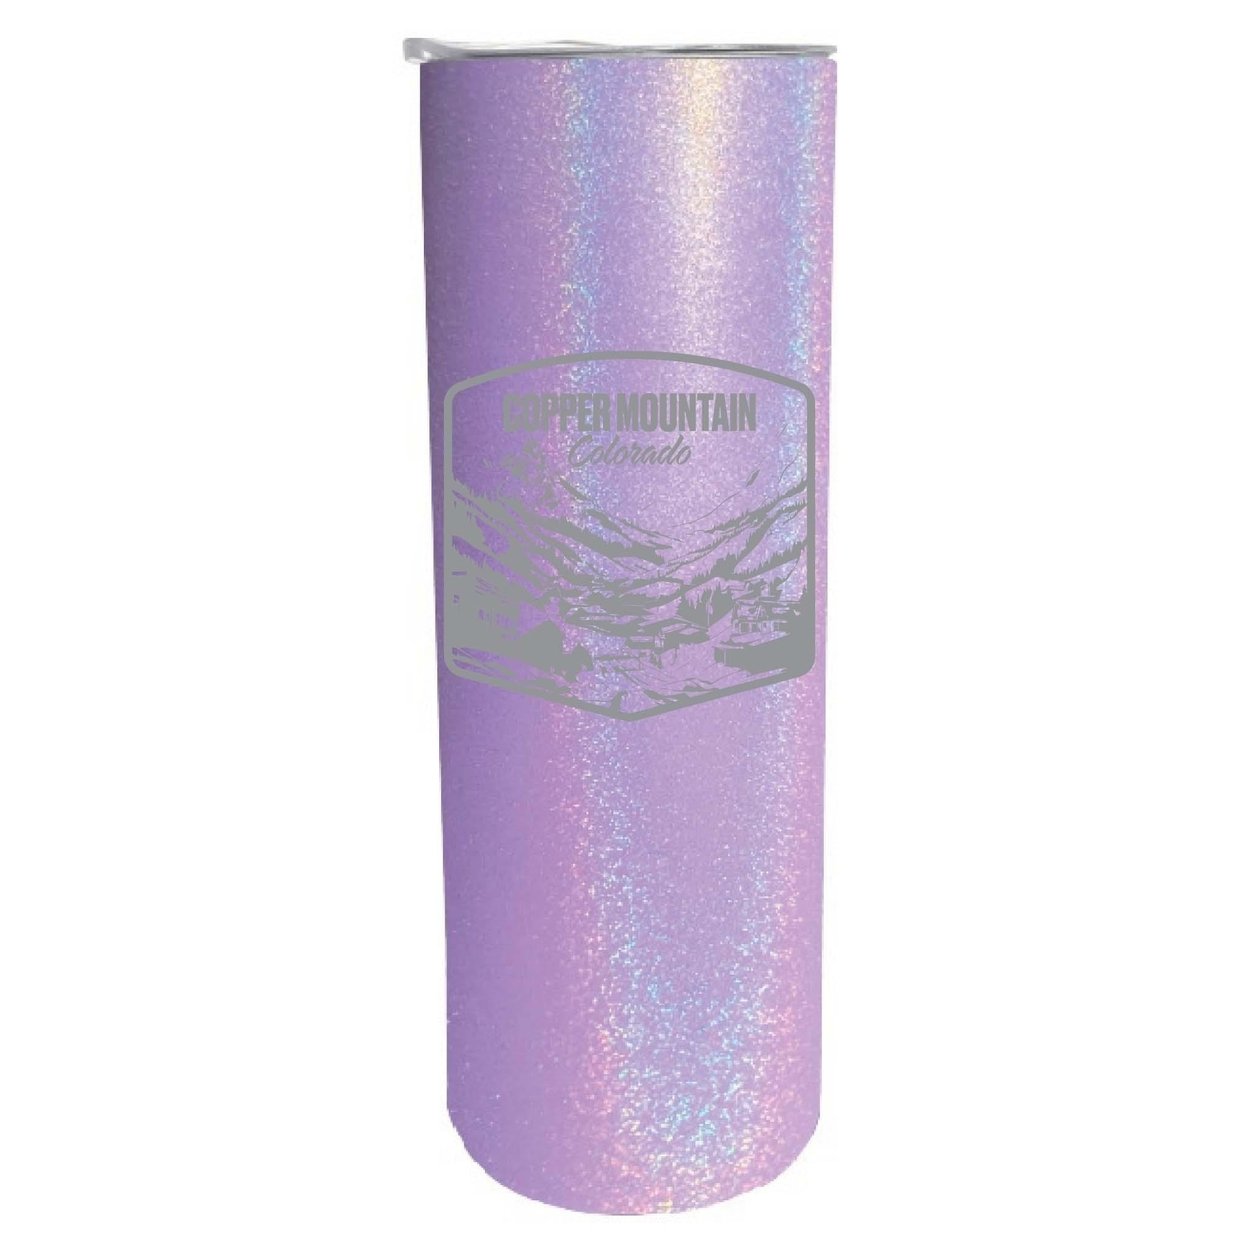 Copper Mountain Souvenir 20 Oz Engraved Insulated Skinny Tumbler - Purple Glitter,,4-Pack